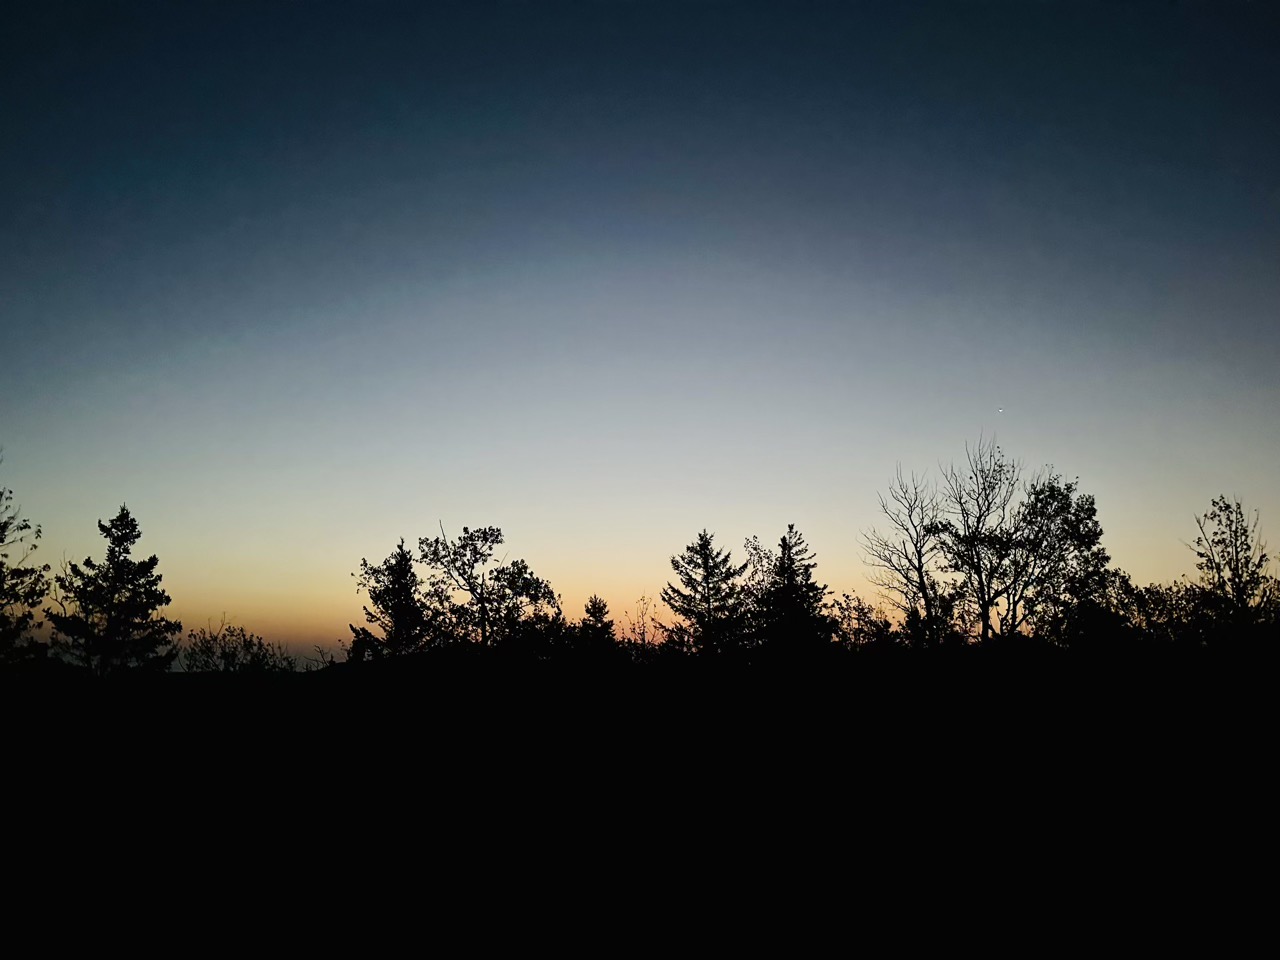 Tree line at dawn